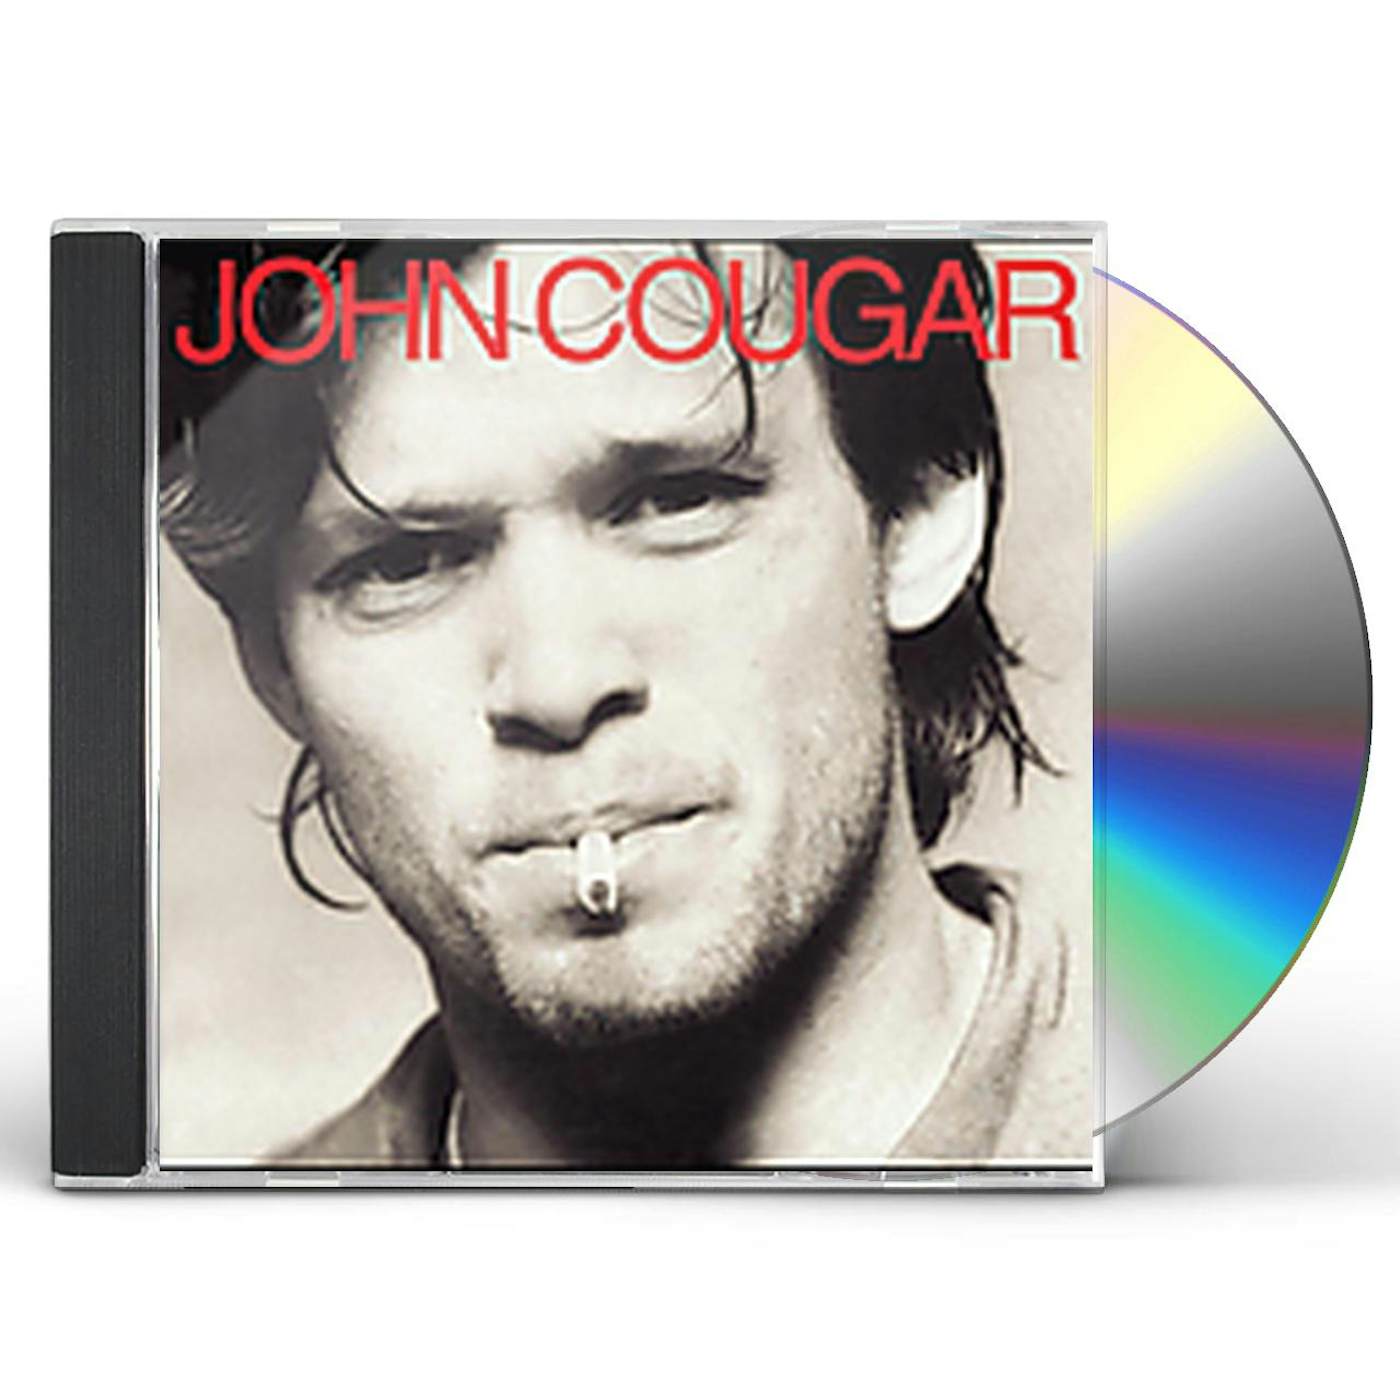 John Mellencamp JOHN COUGAR CD